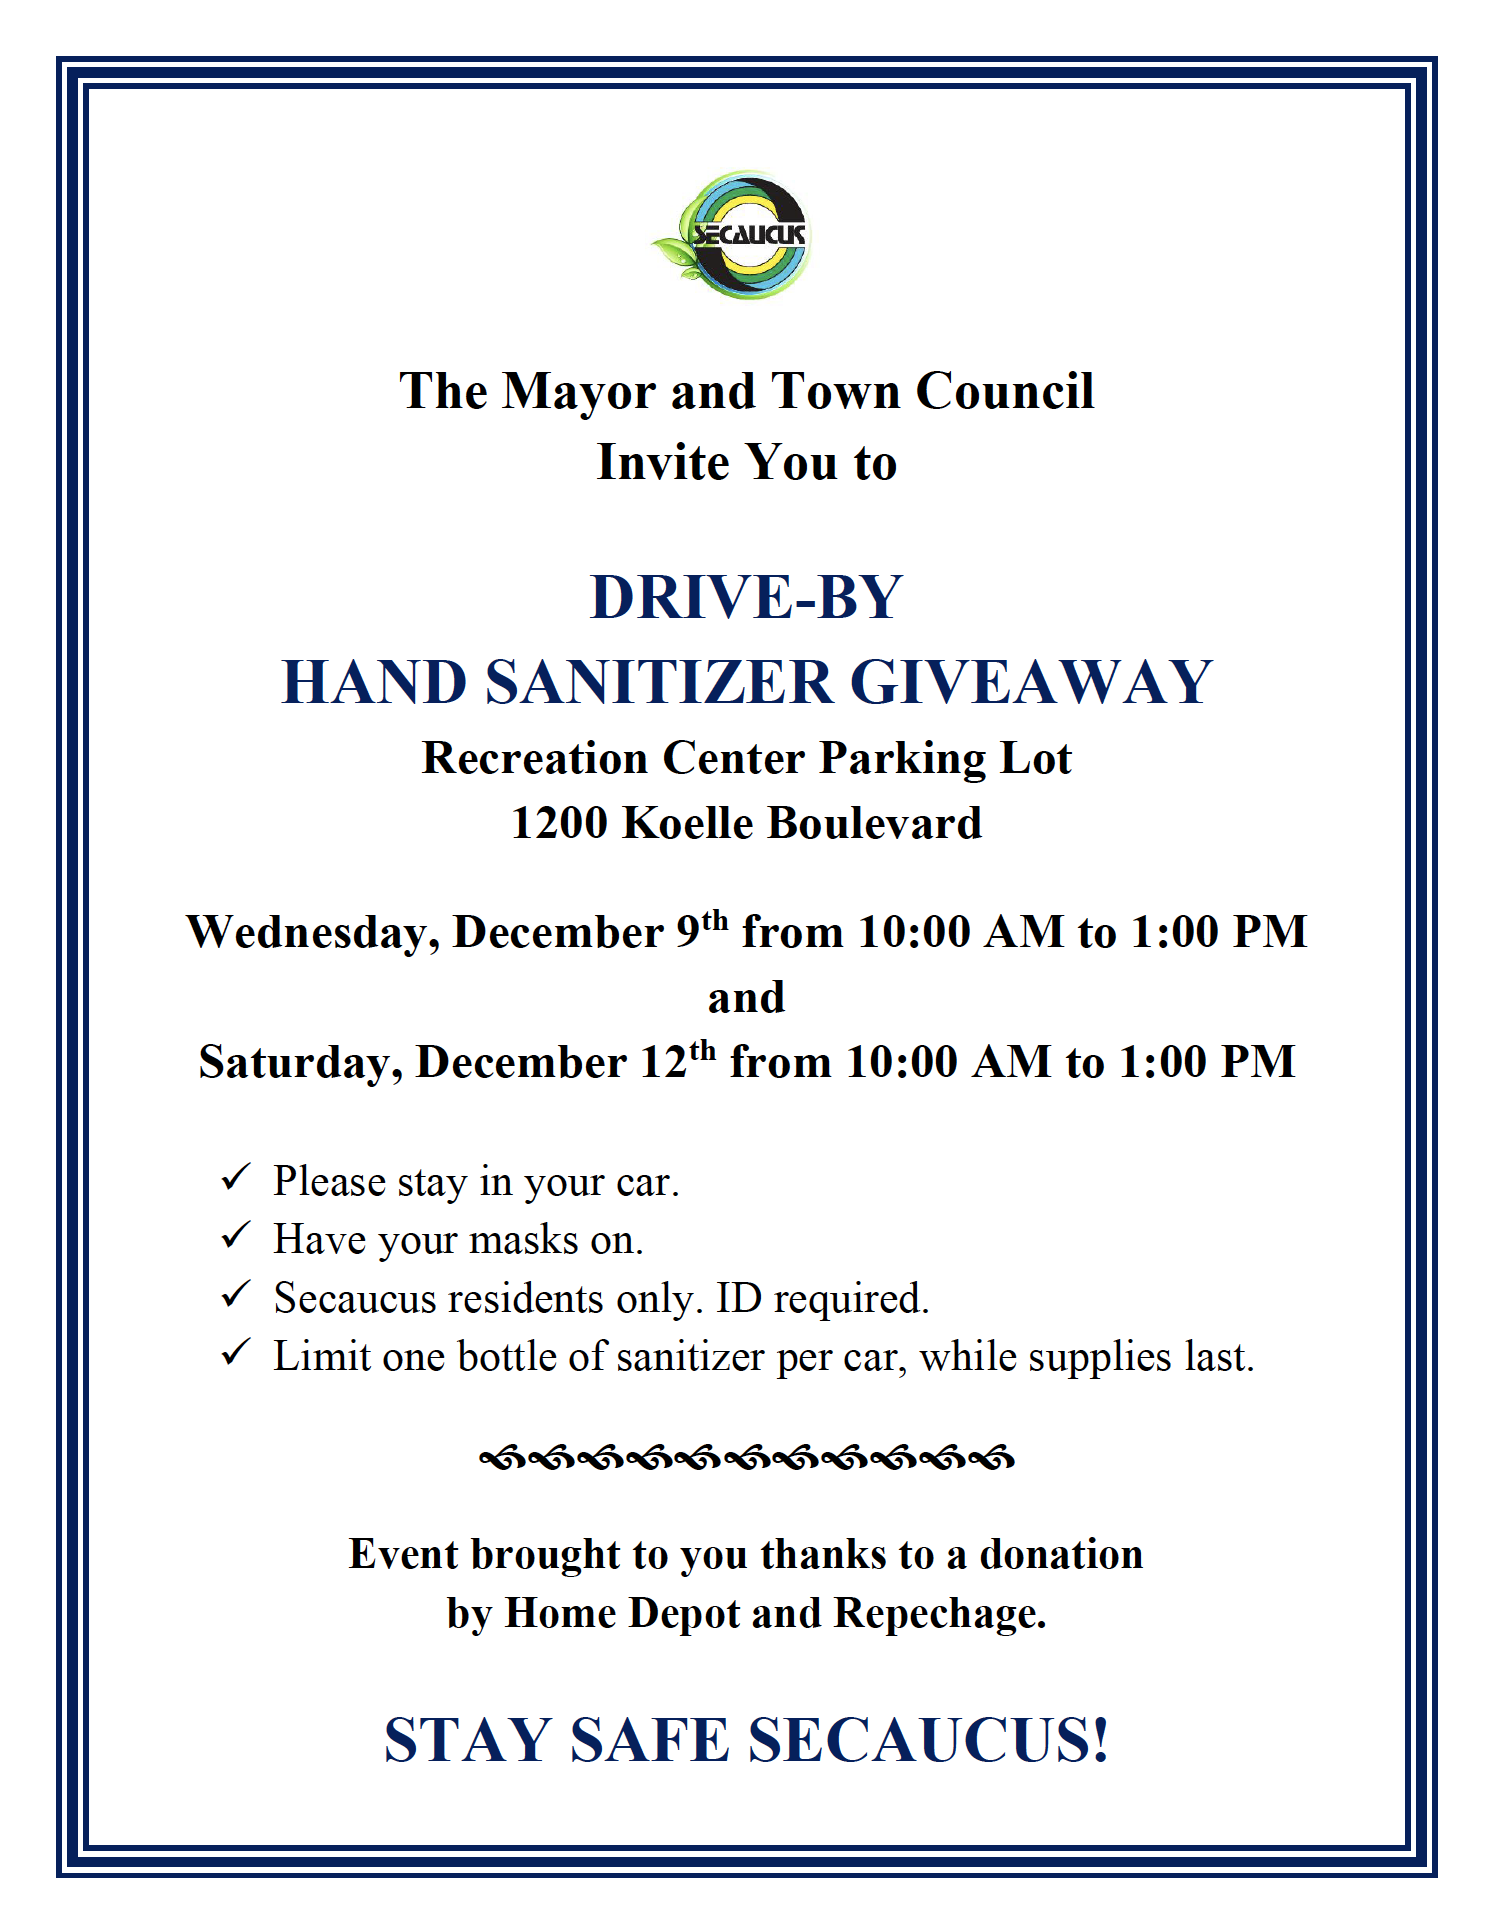 Hand Sanitizer Giveaway